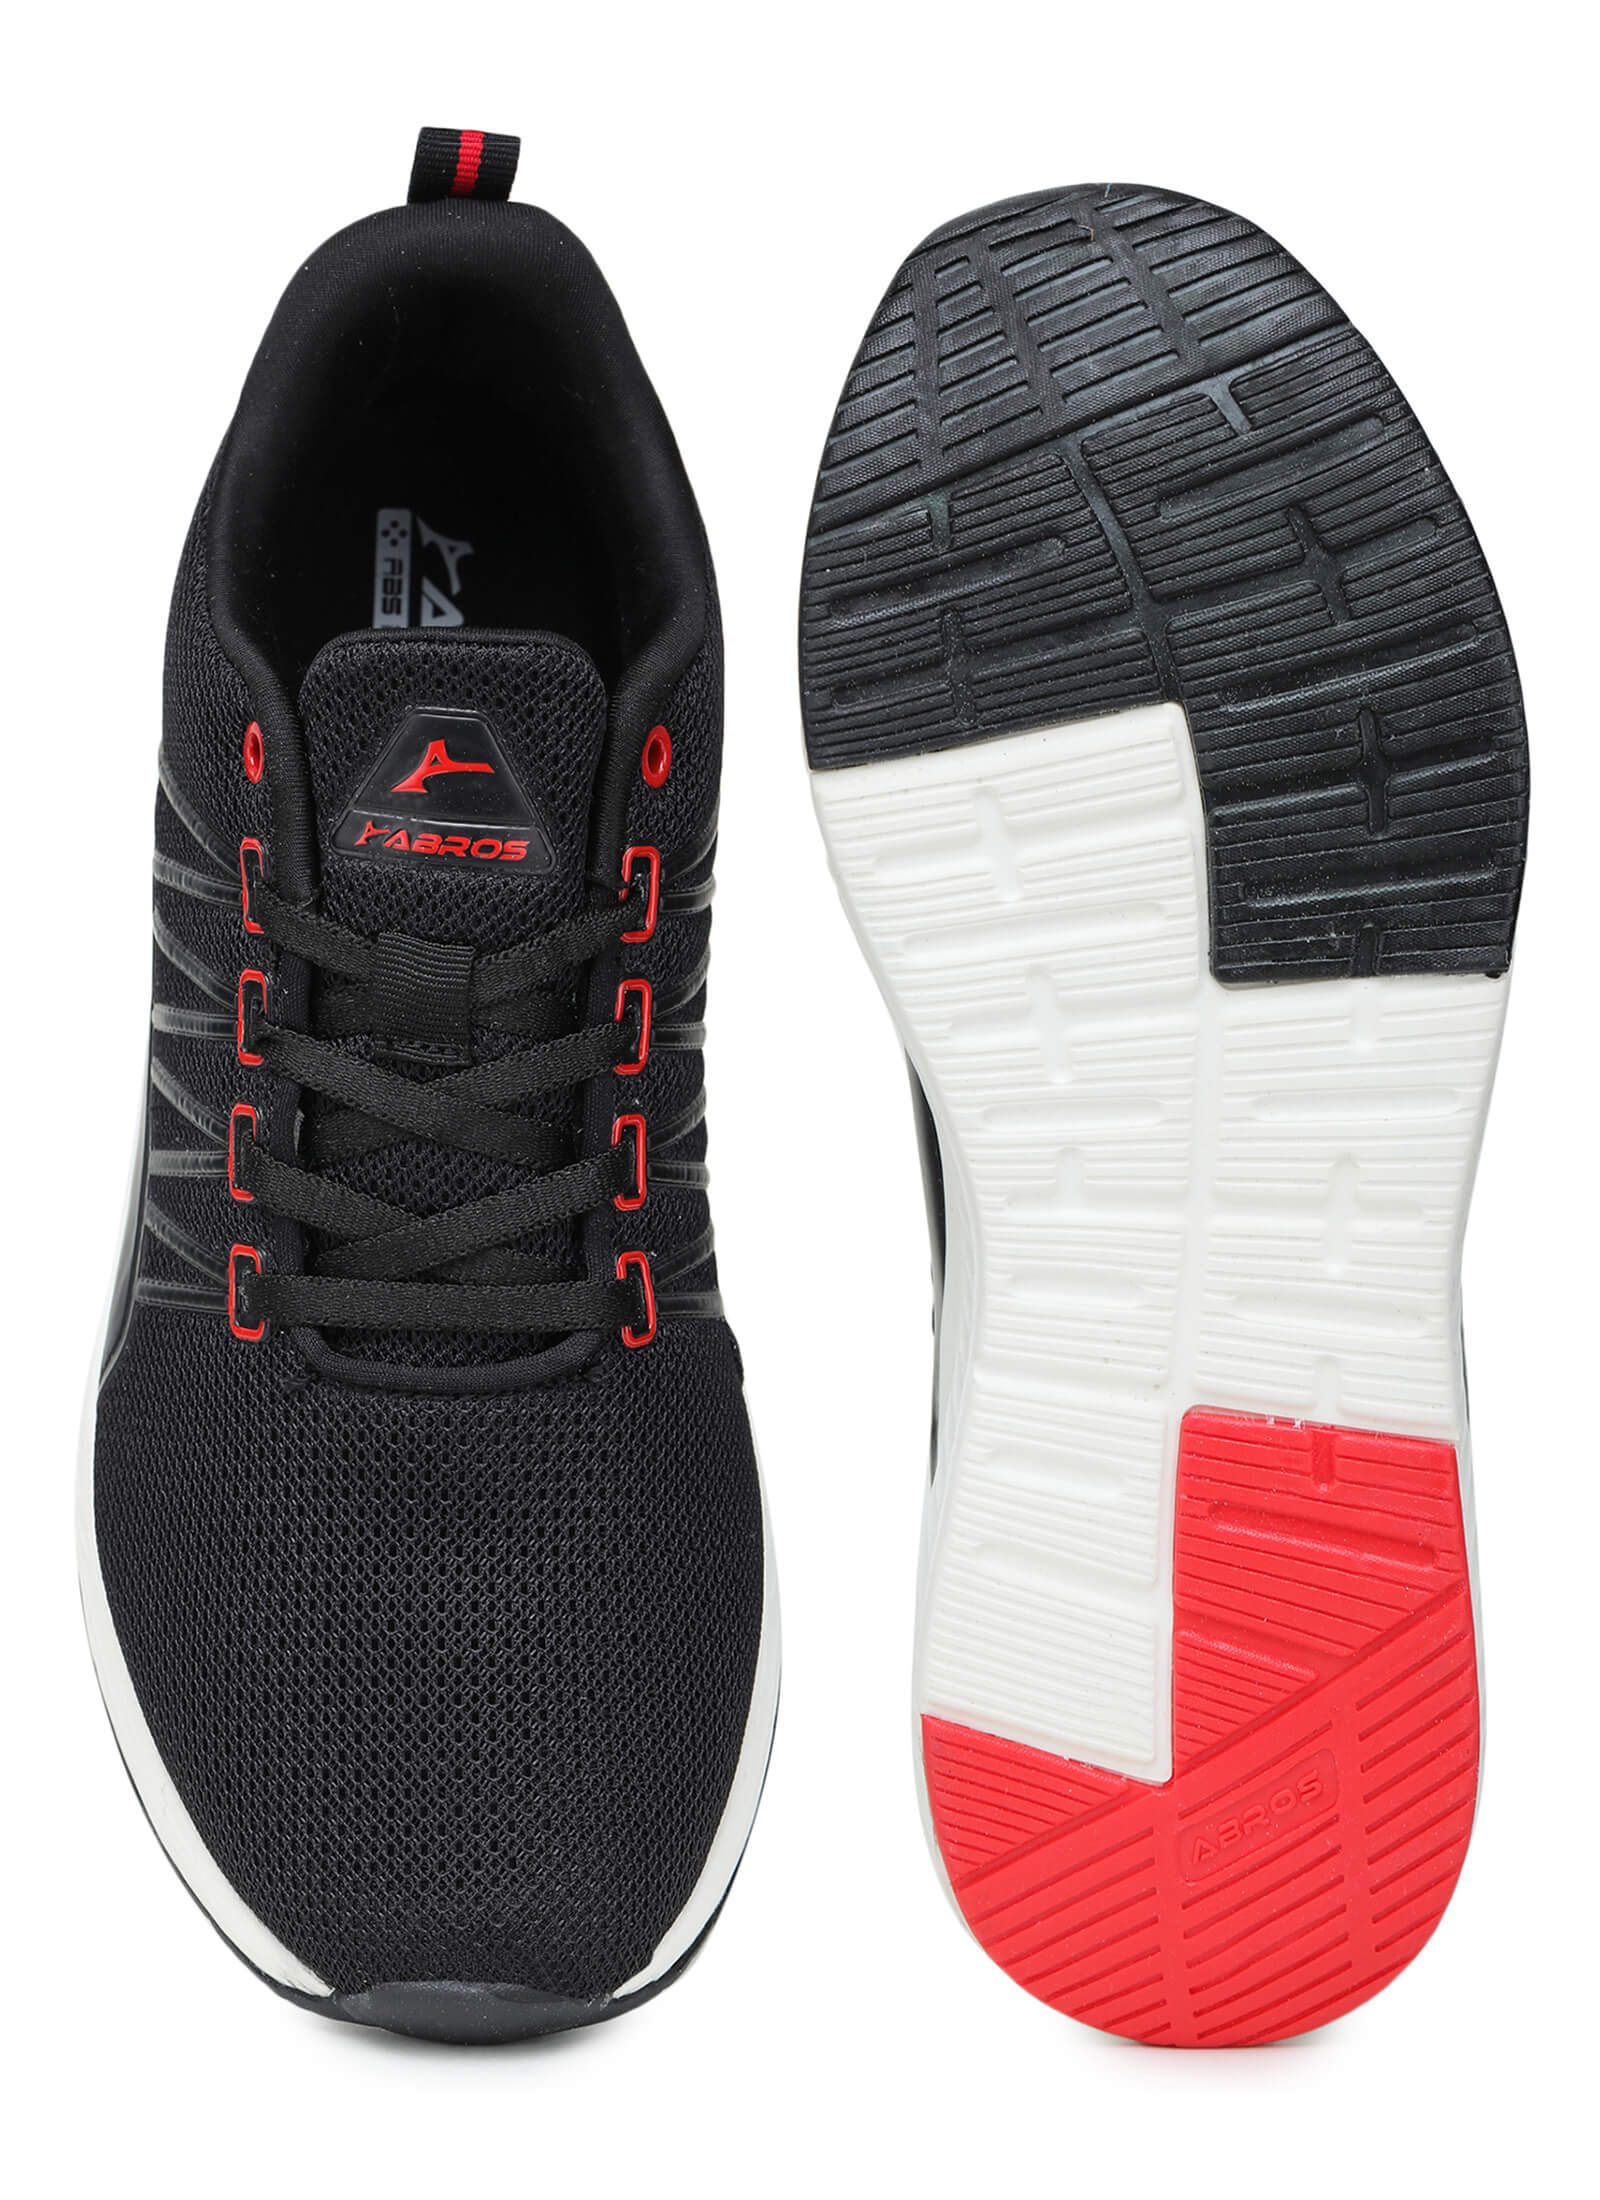 Arizona-N Lightweight Anti-Skid Sports Shoes for Men